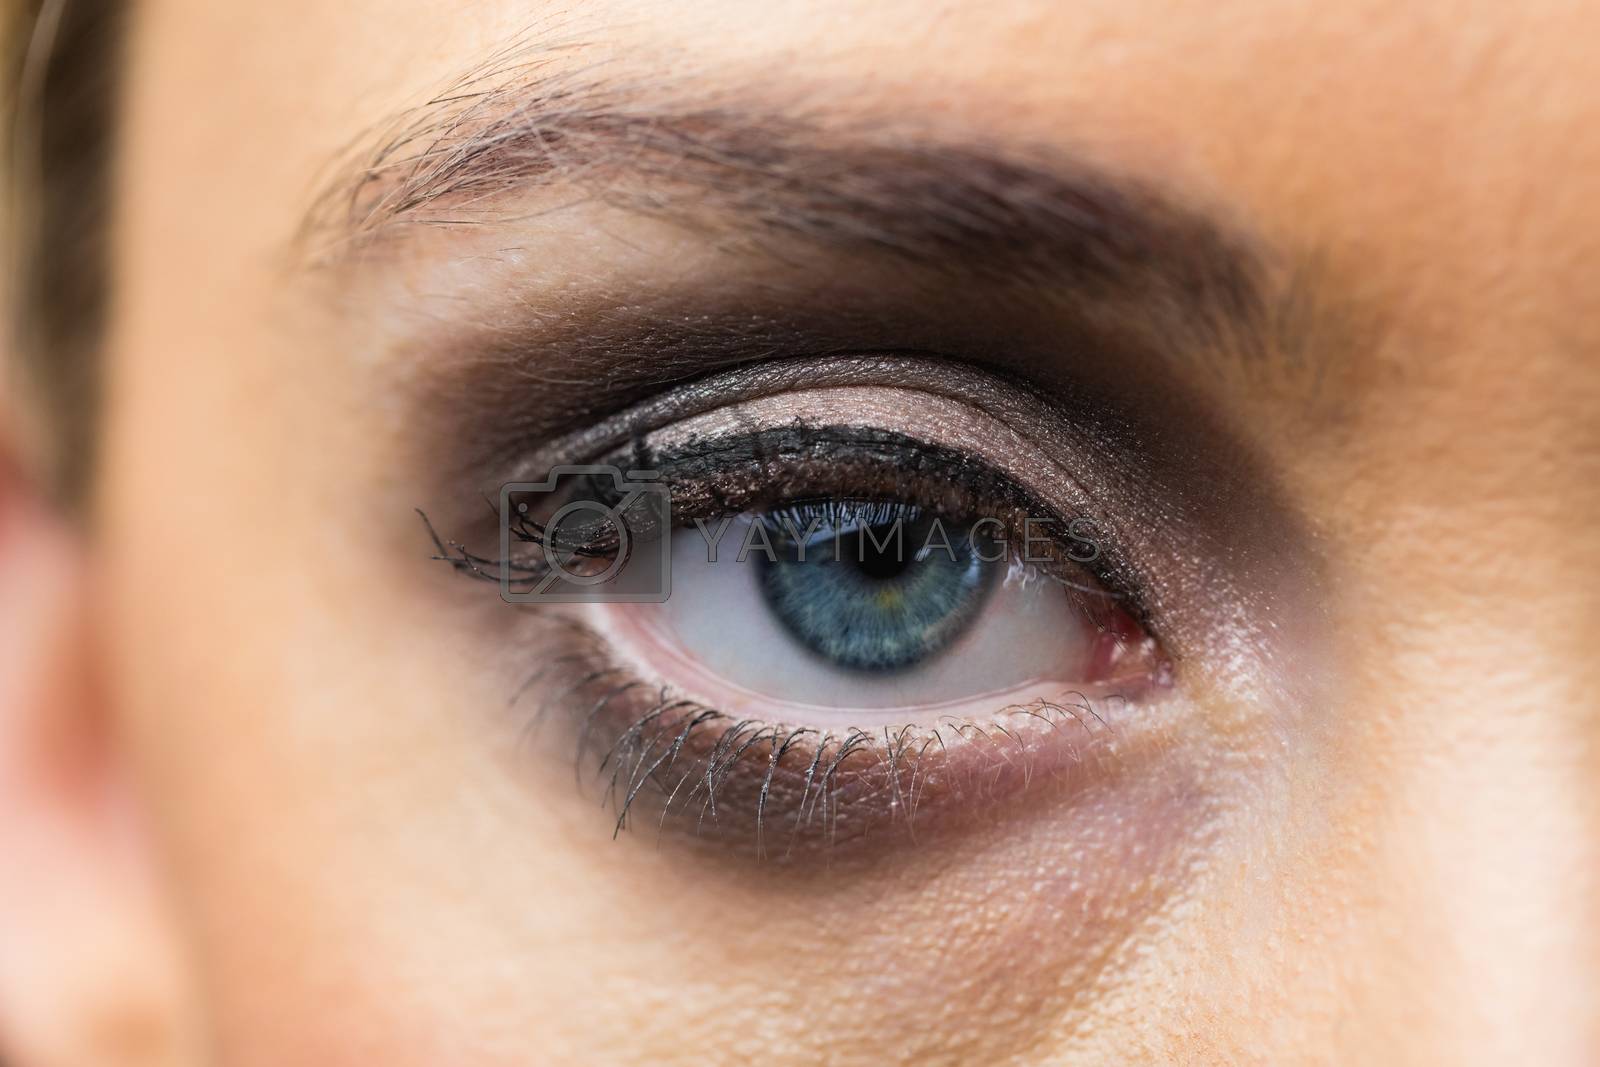 Royalty free image of Focus on eyes makeup with opened eyes by Wavebreakmedia